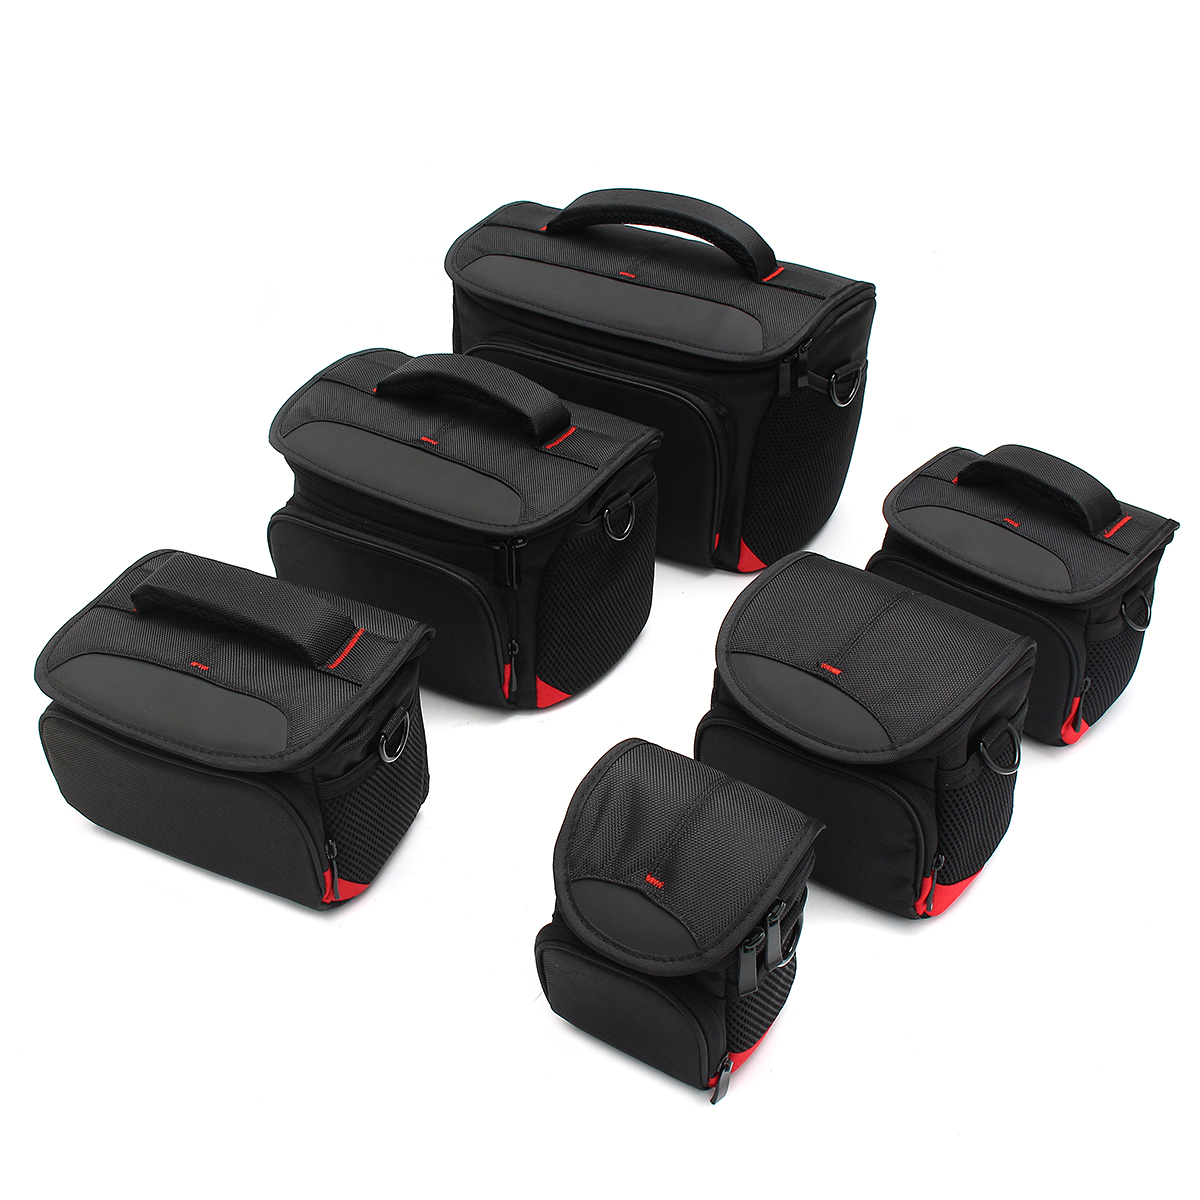 Waterproof-Camera-Shoulder-Bag-Travel-Carrying-Case-with-Rain-Cover-For-DSLR-SLR-Camera-Flash-Lens-1633799-1